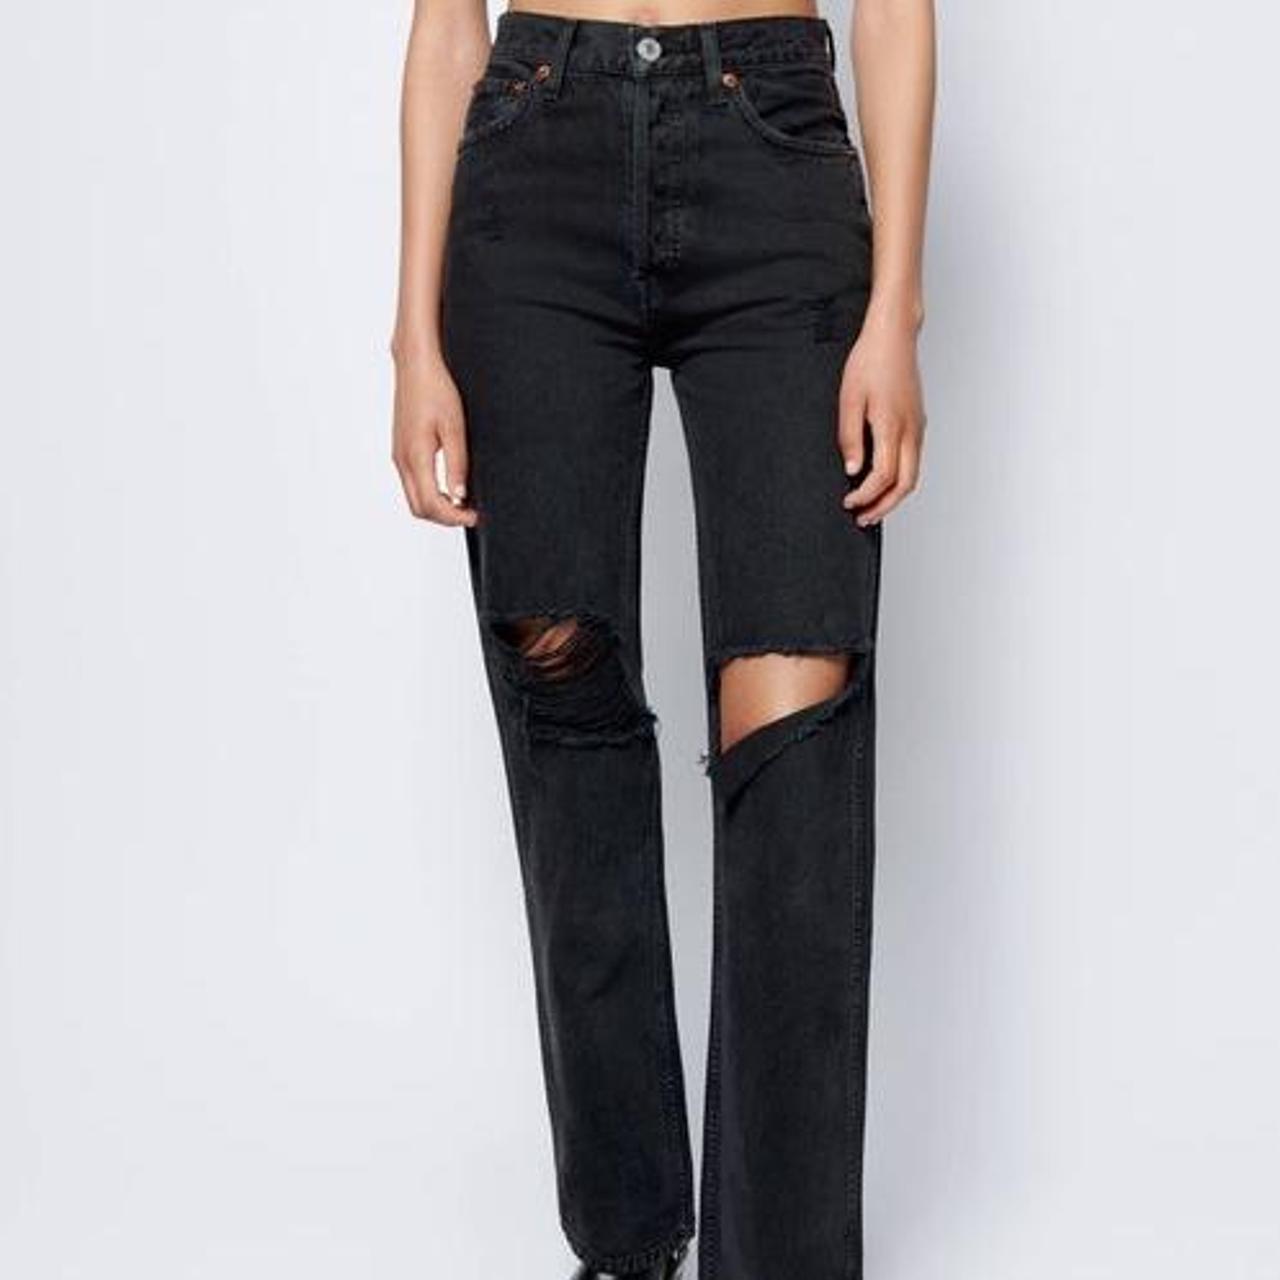 RE/DONE Women's Black Jeans